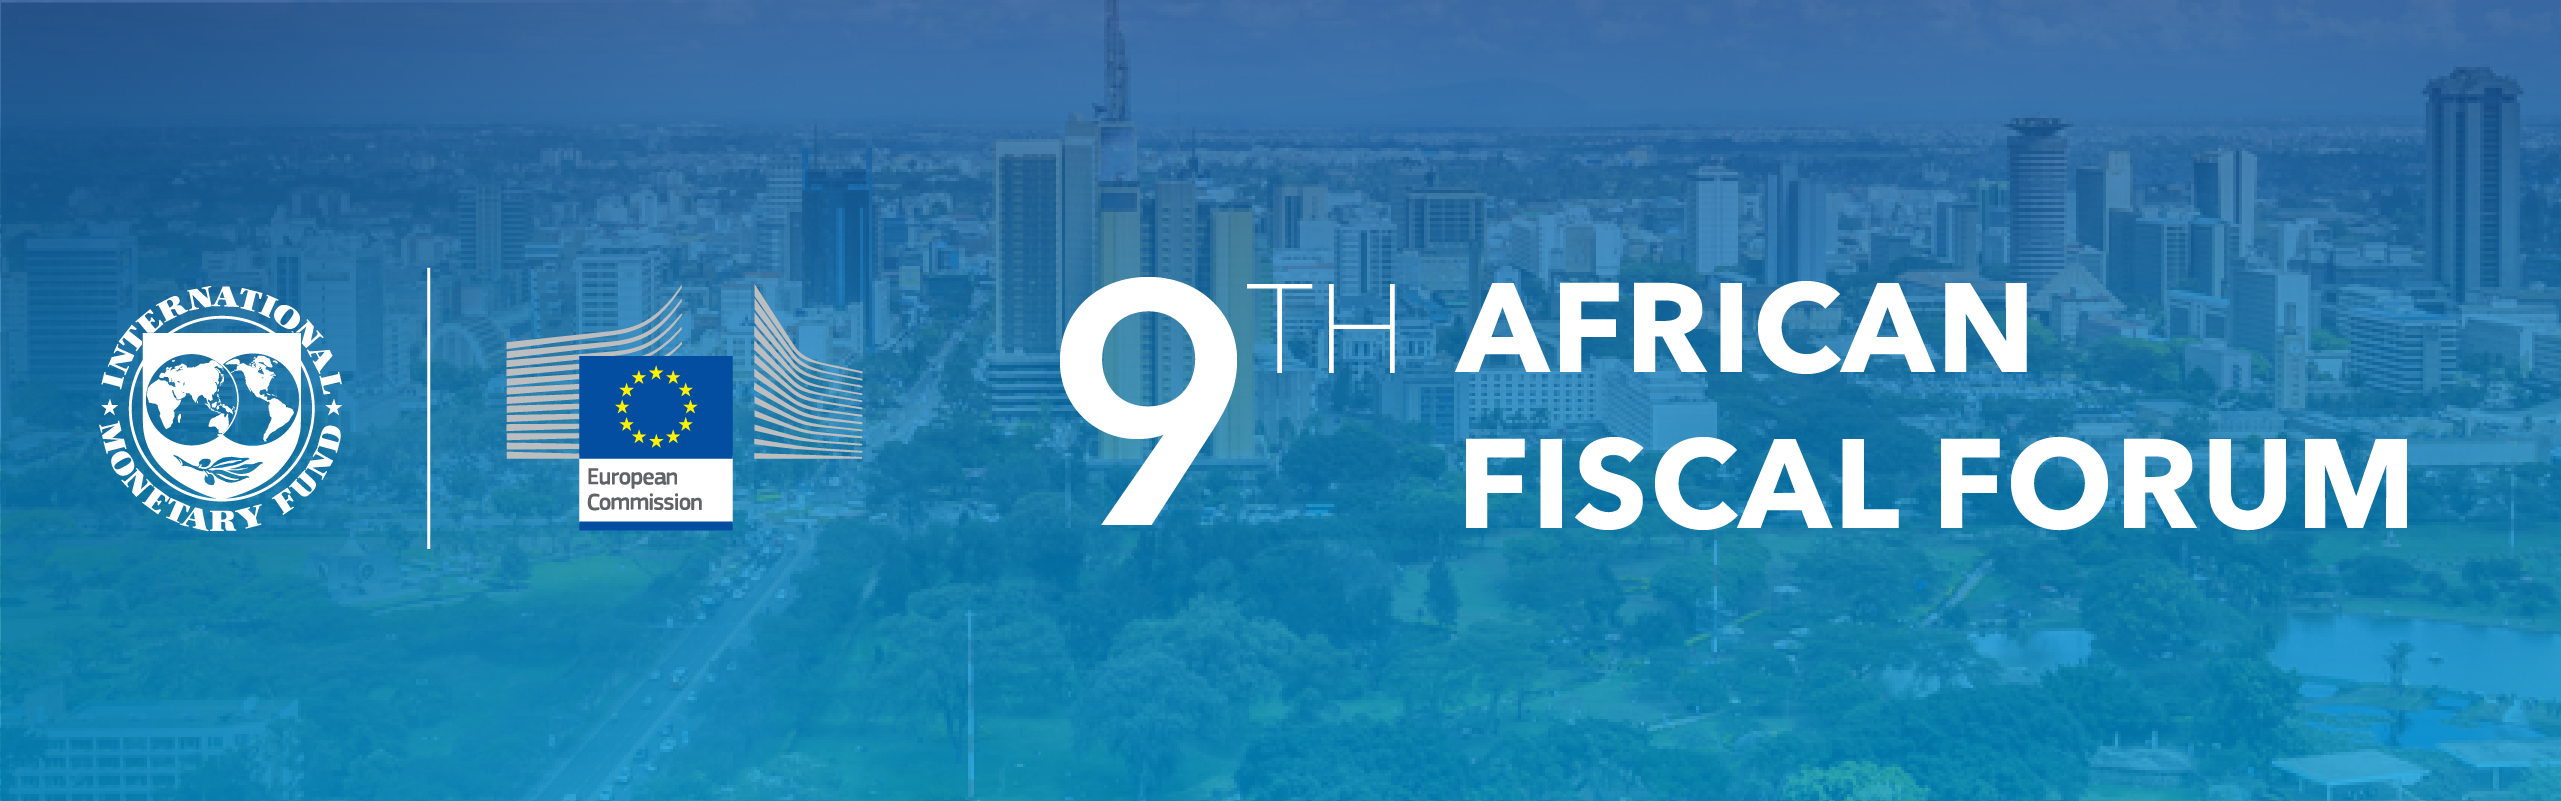 African Fiscal Forum - banner